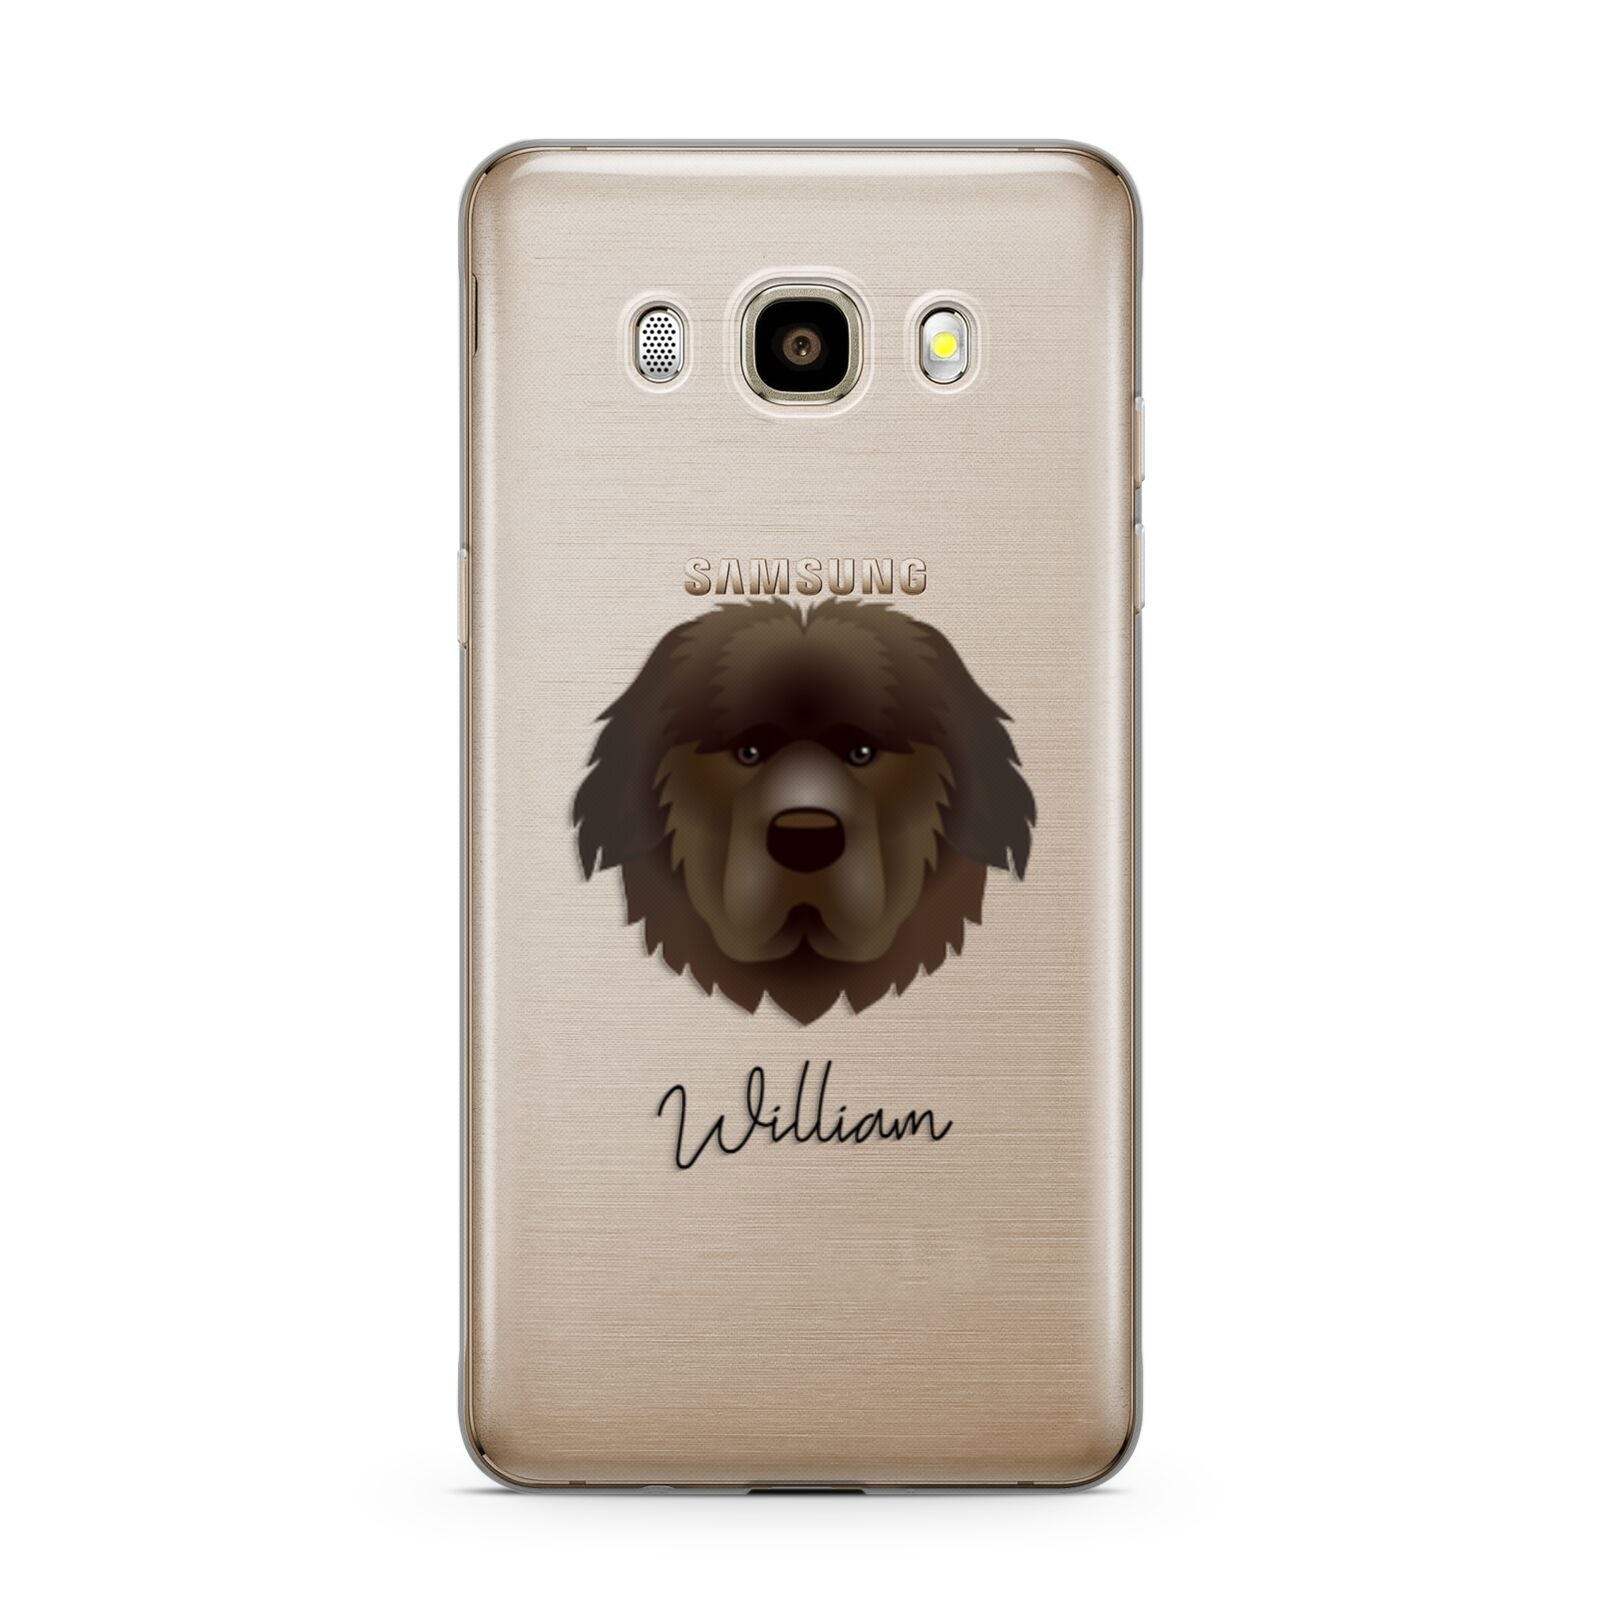 Newfoundland Personalised Samsung Galaxy J7 2016 Case on gold phone